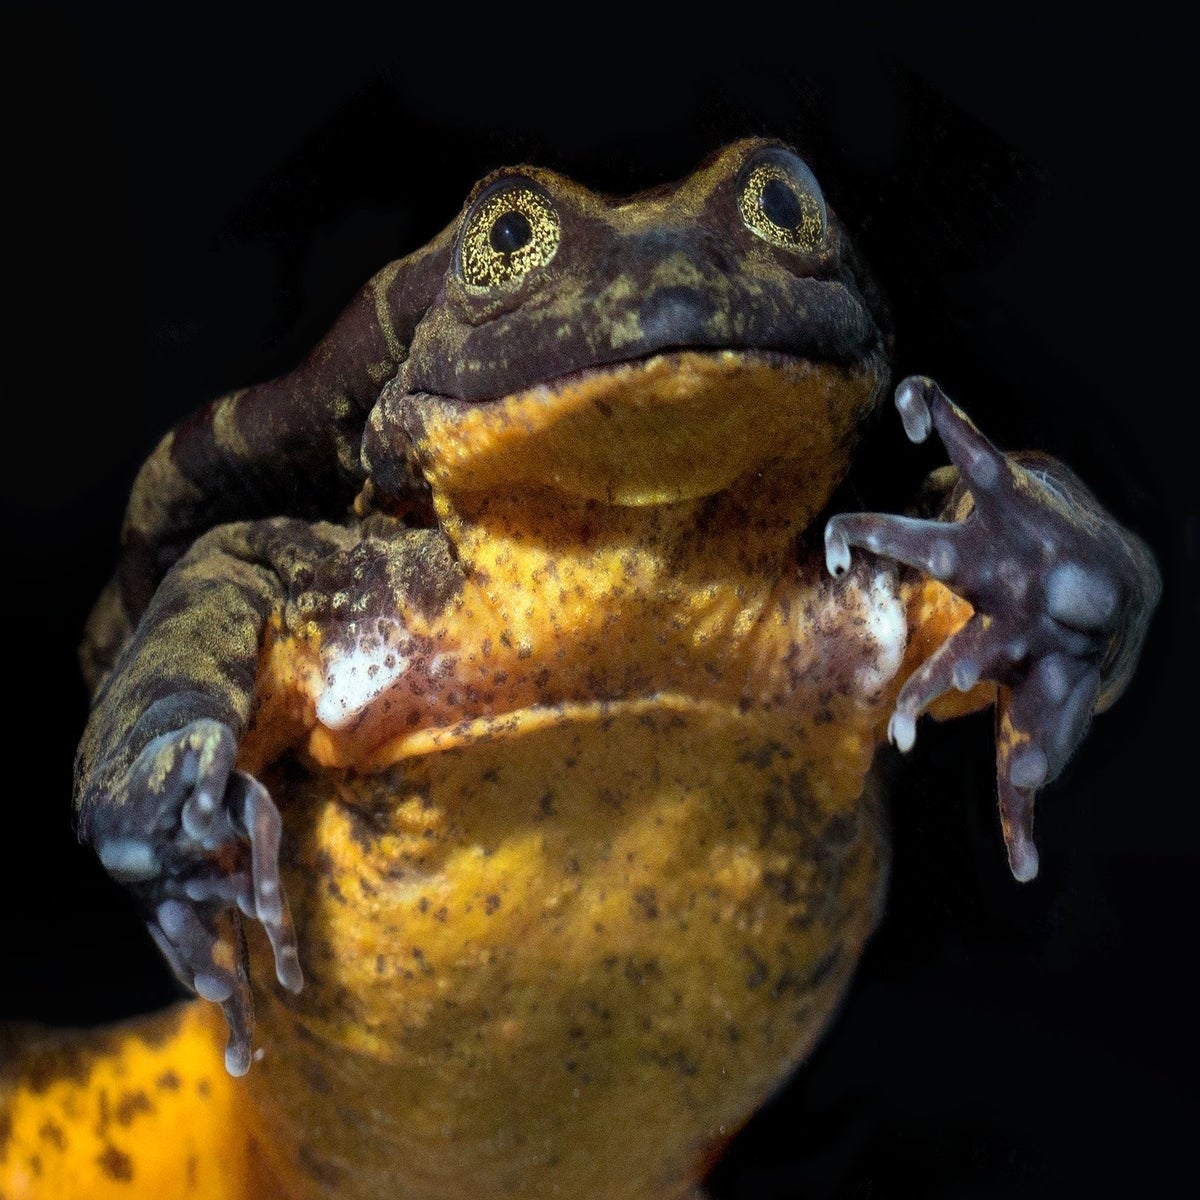 May 3: The Secret Lives of Amphibians